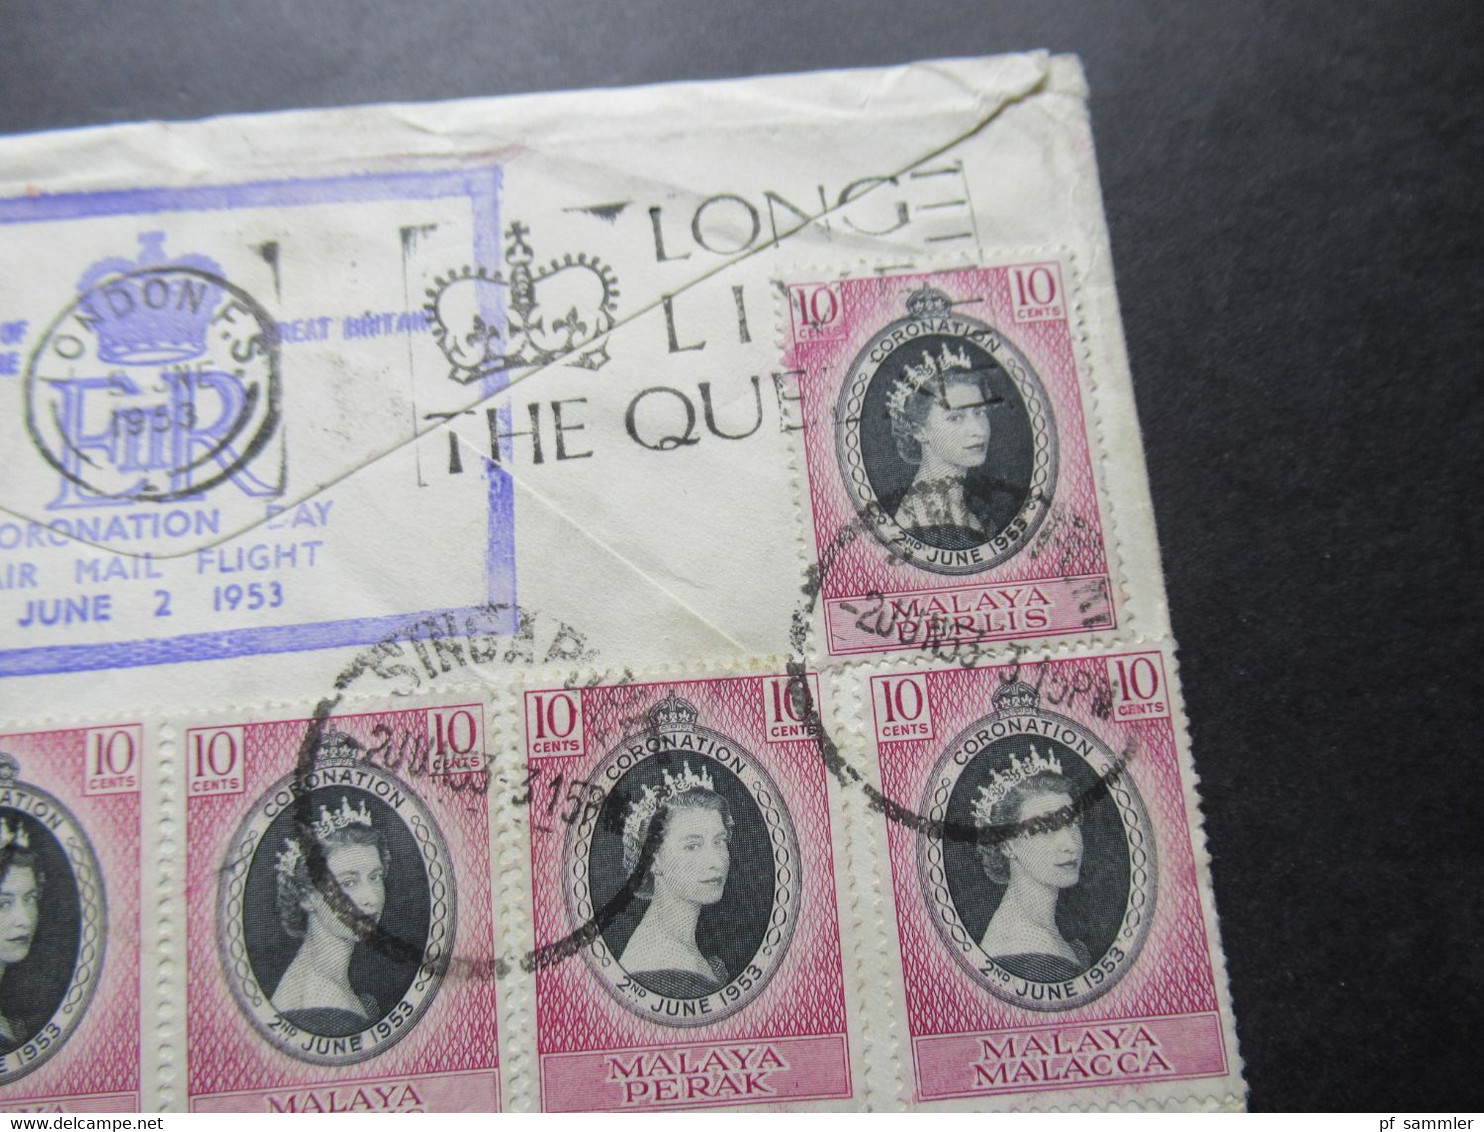 Quantas 2 Sonderbelege  1953 Coronation Elizabeth rückseitig weitere Marken und Stempel Colony of Singapore / Long live